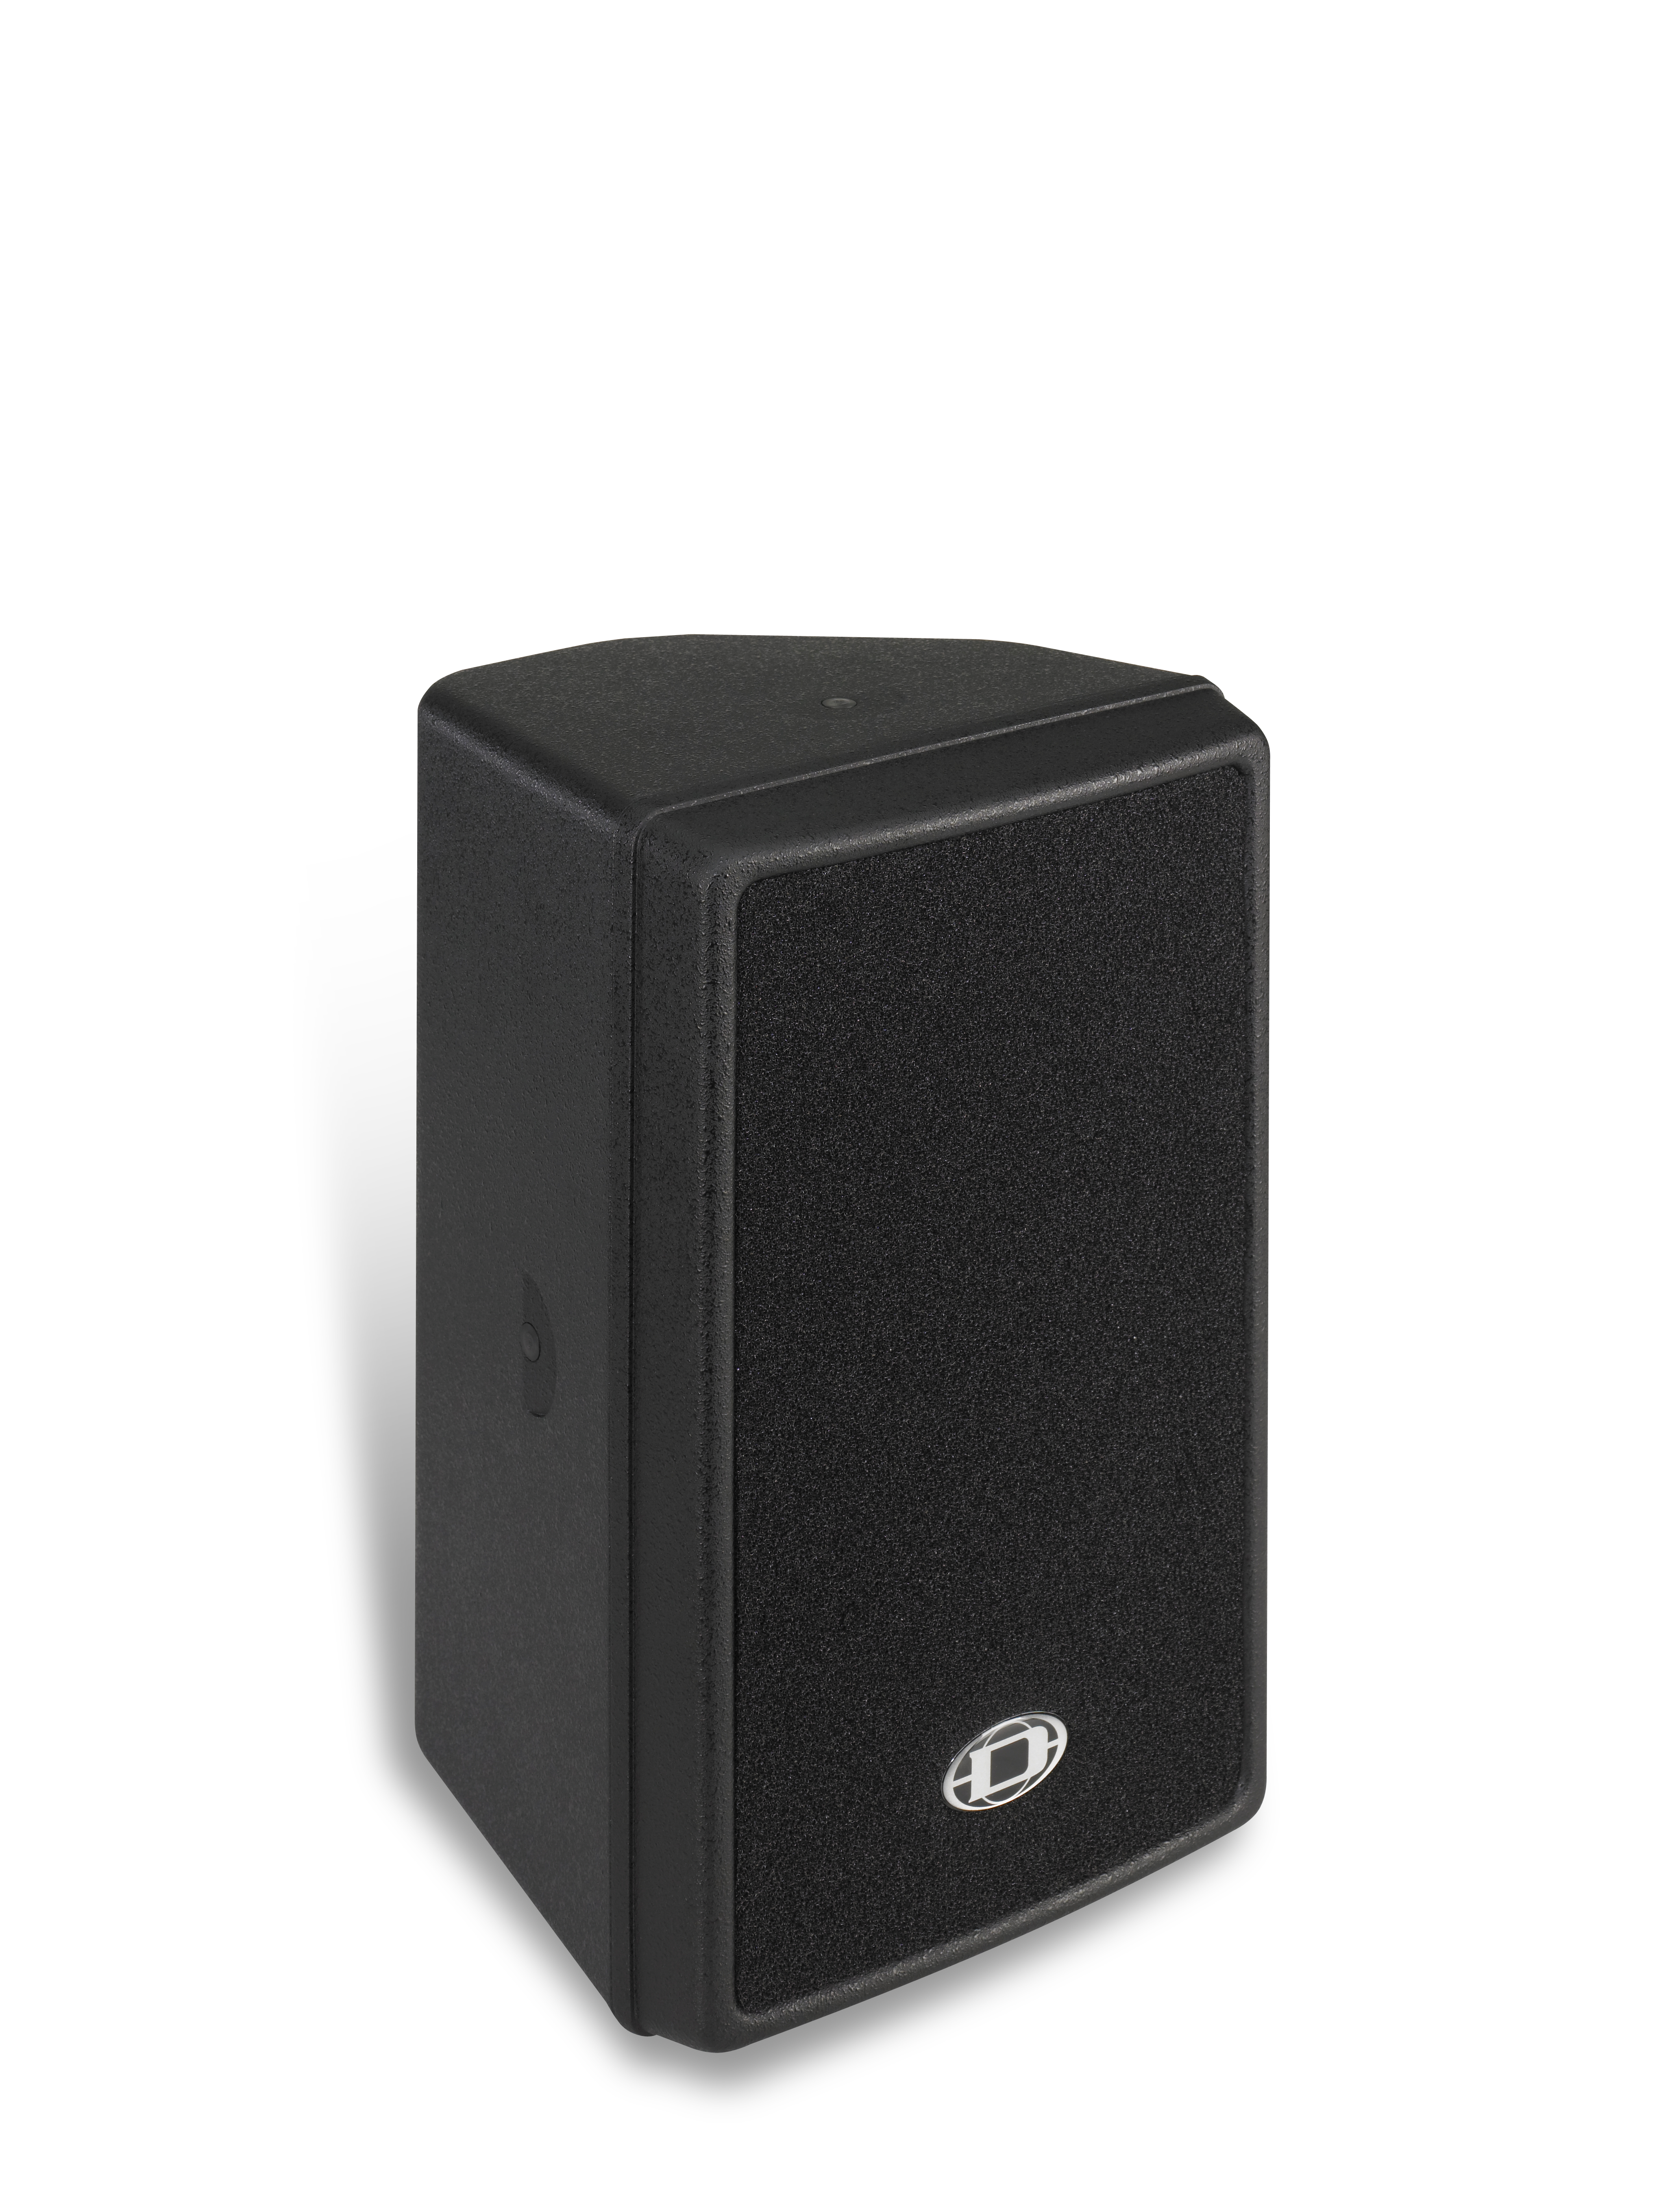 speaker box cad programs